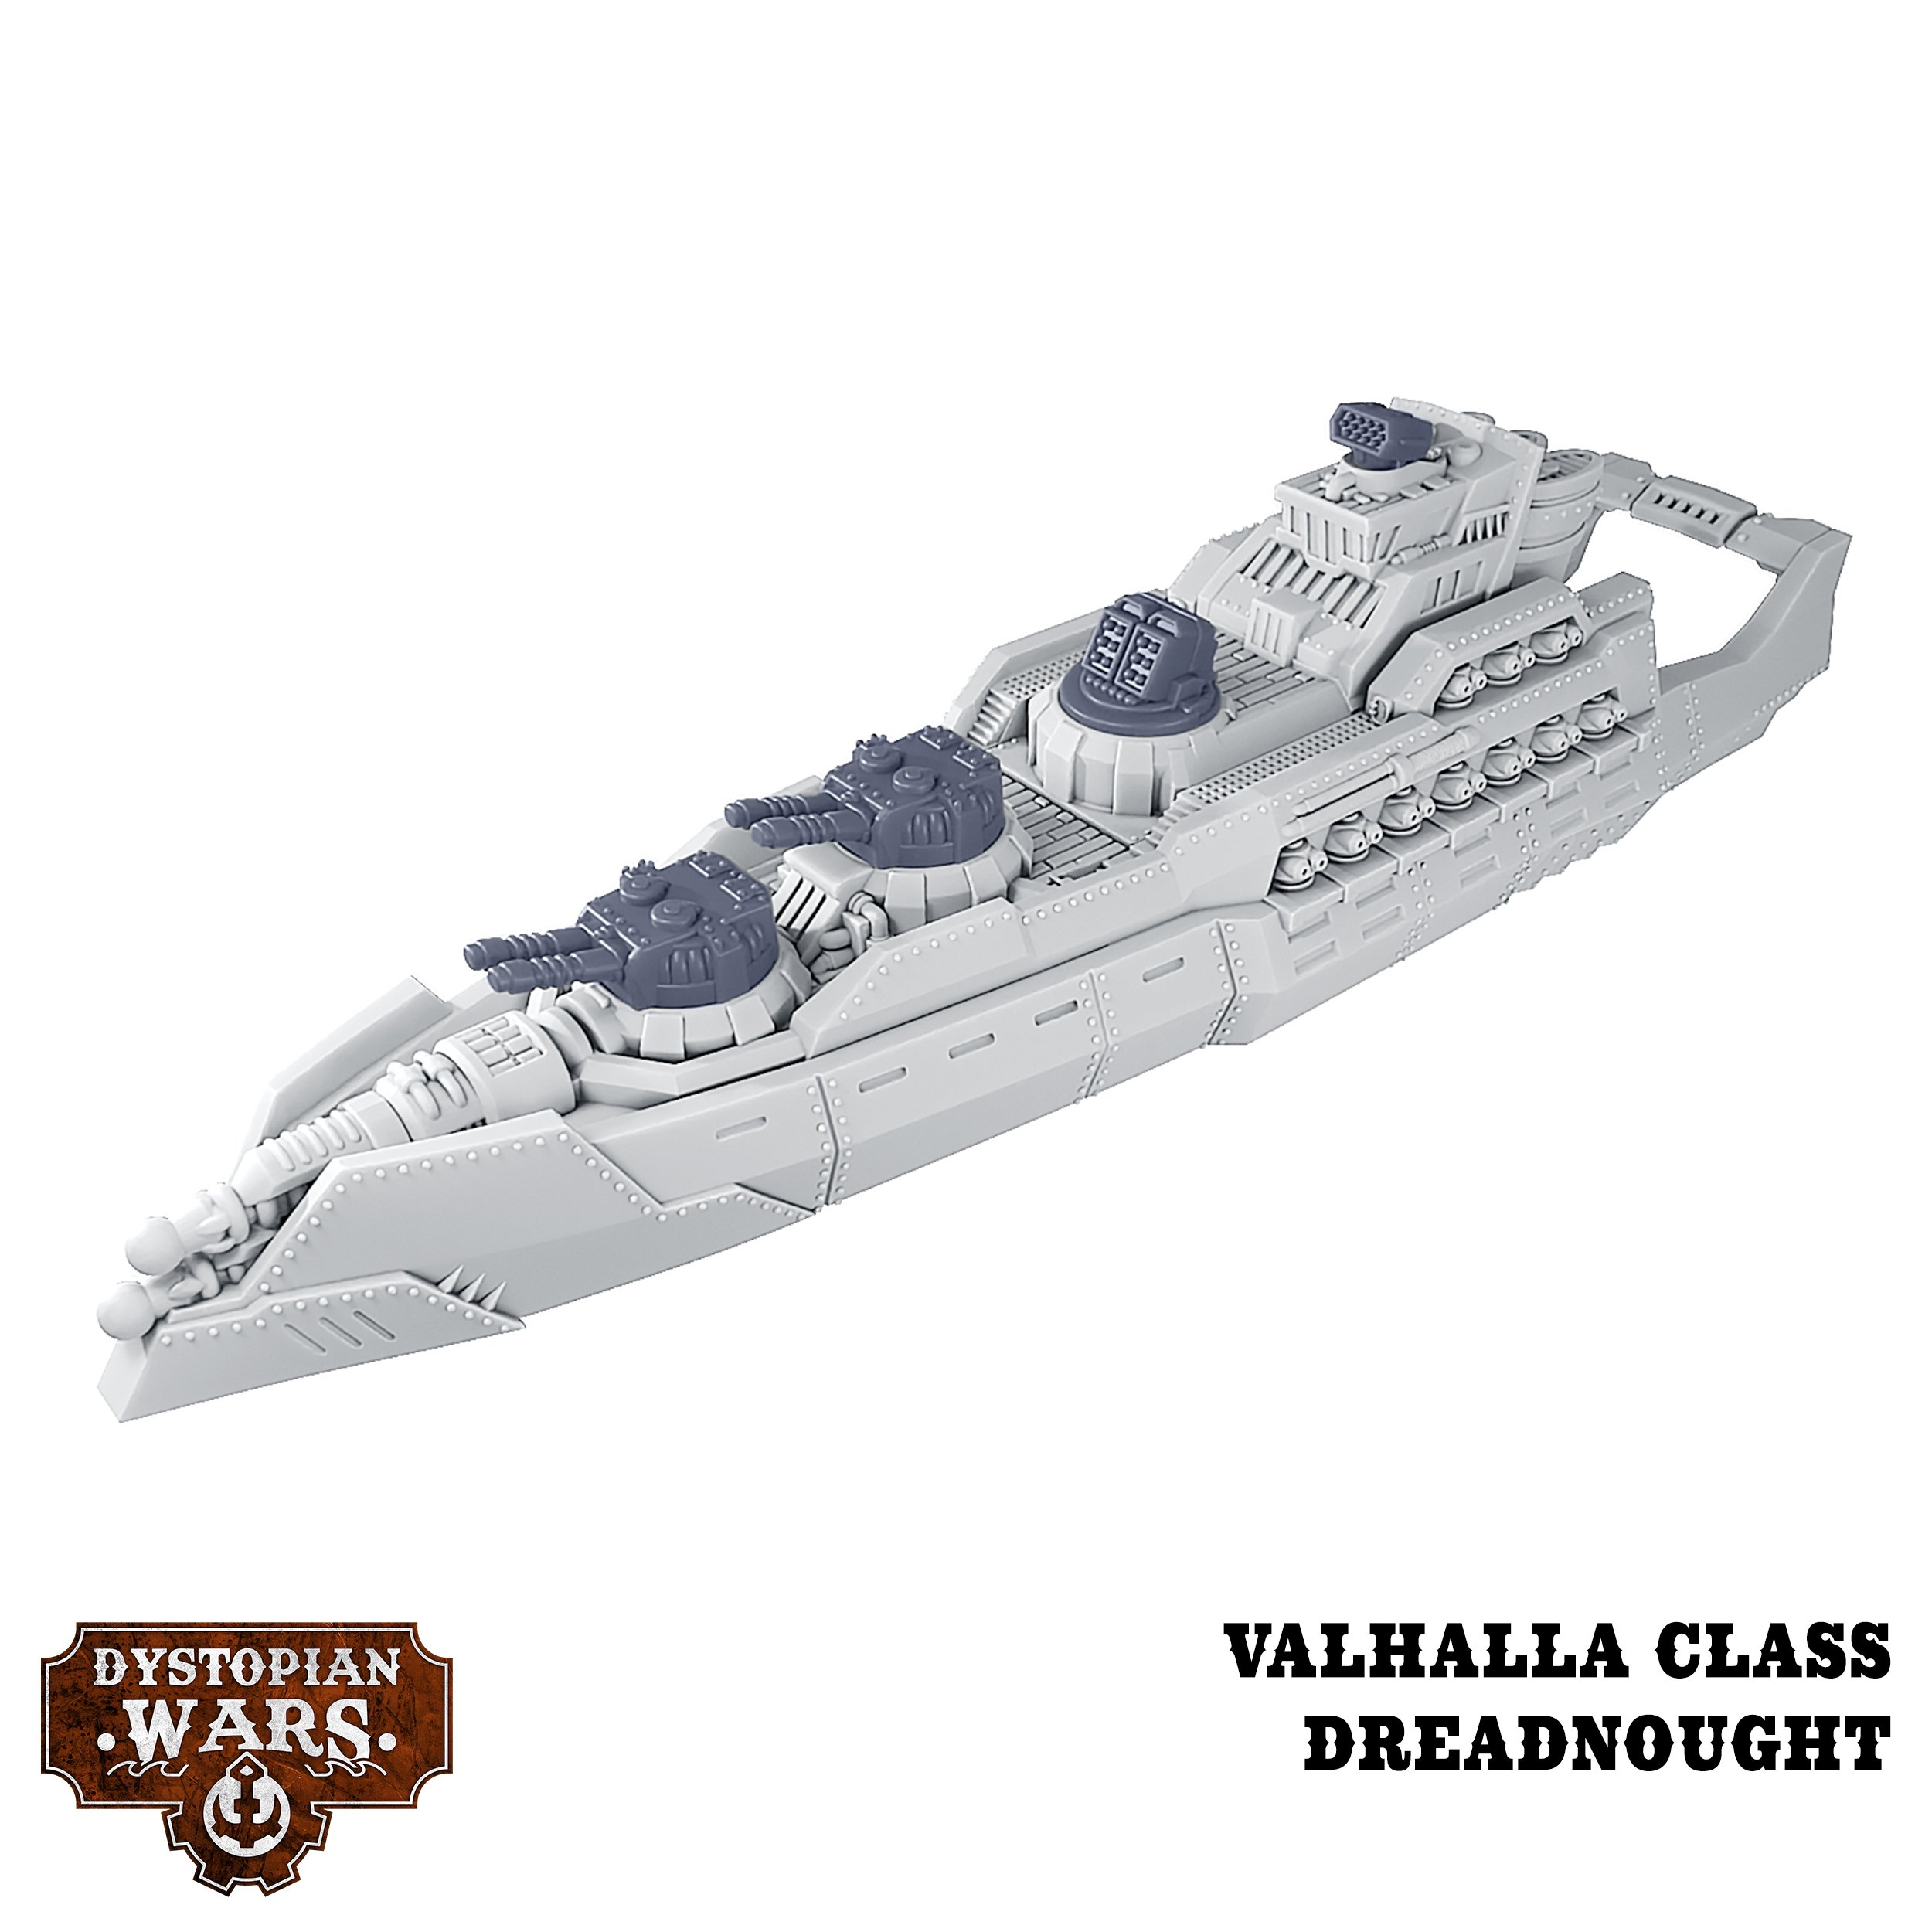 Valhalla Class Dreadnought - Dystopian Wars